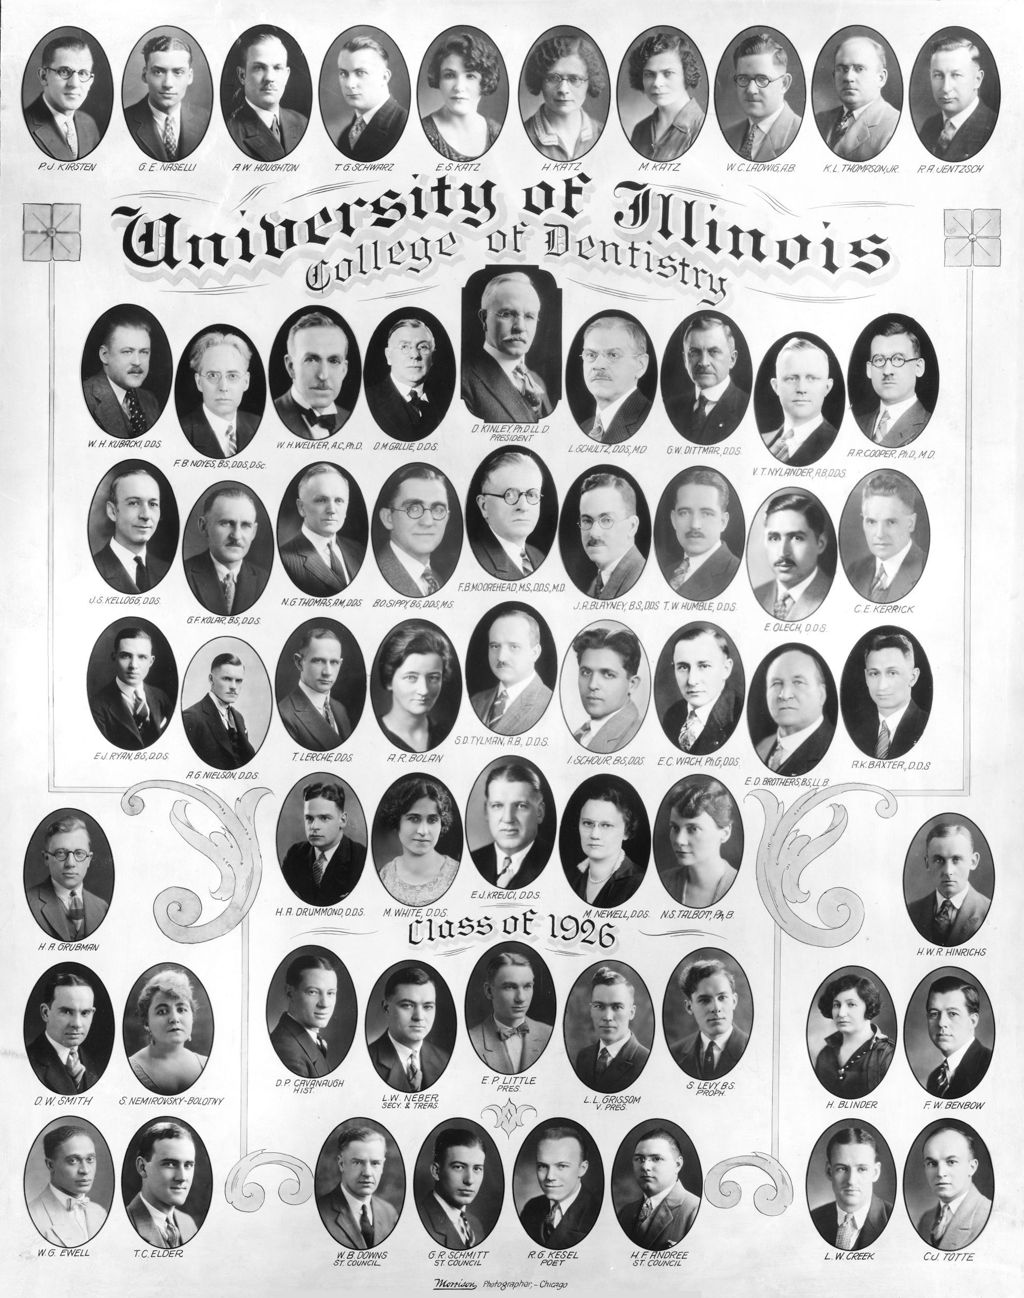 1926 graduating class, University of Illinois College of Dentistry